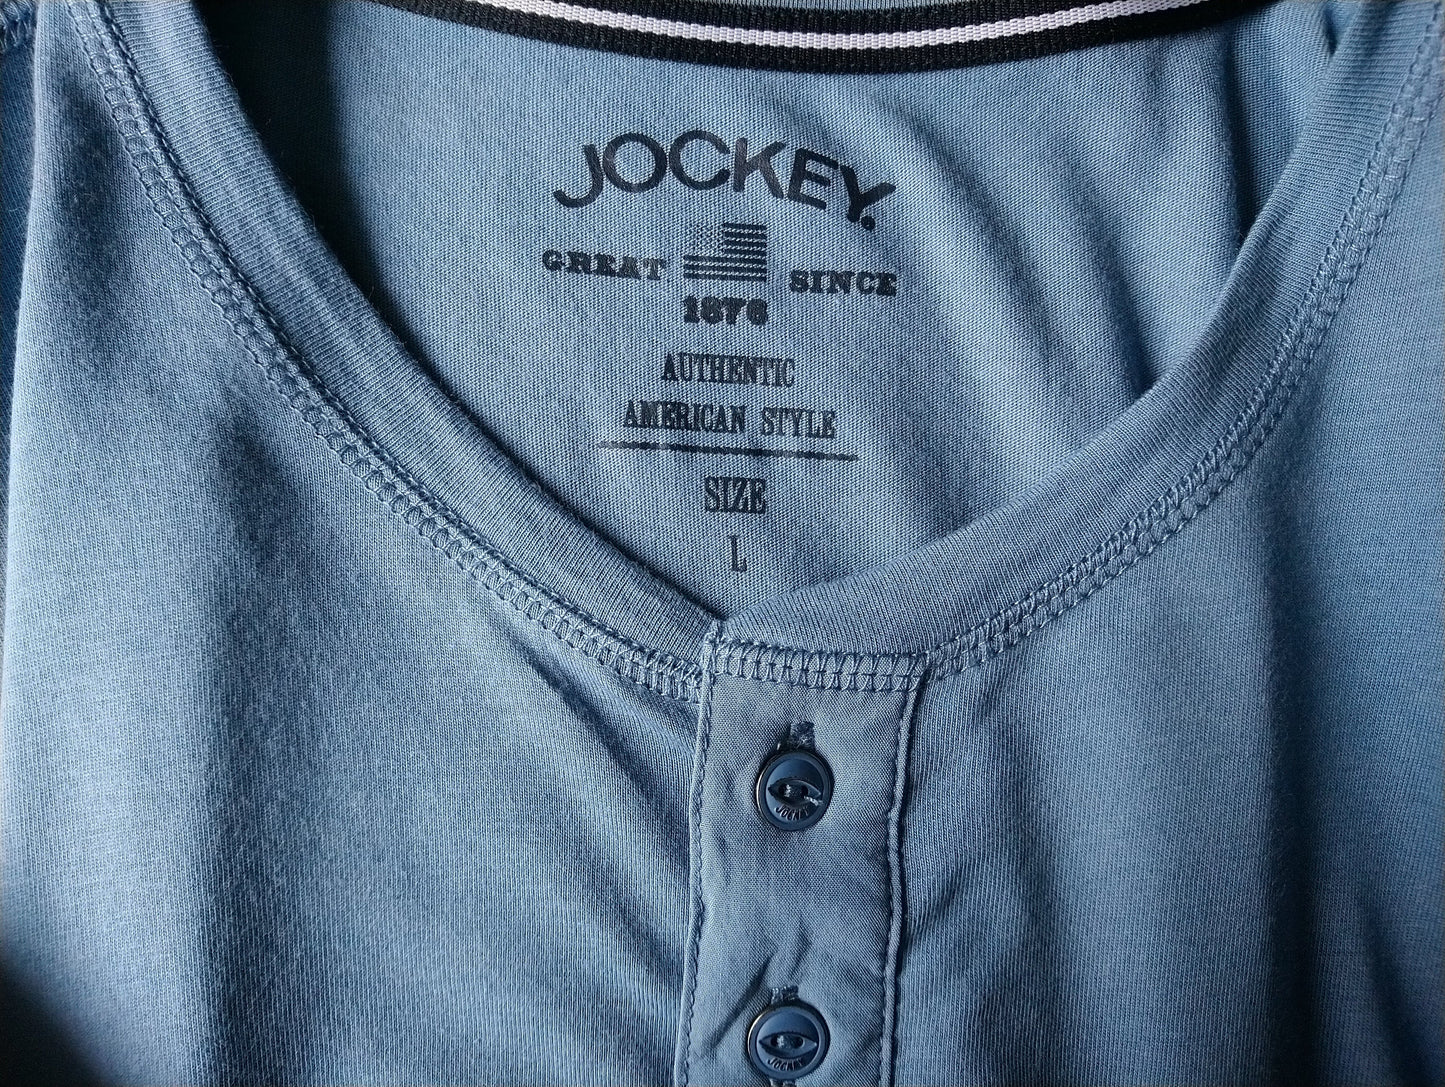 Jockey shirt met knoopjes. Blauw gekleurd. Maat L.